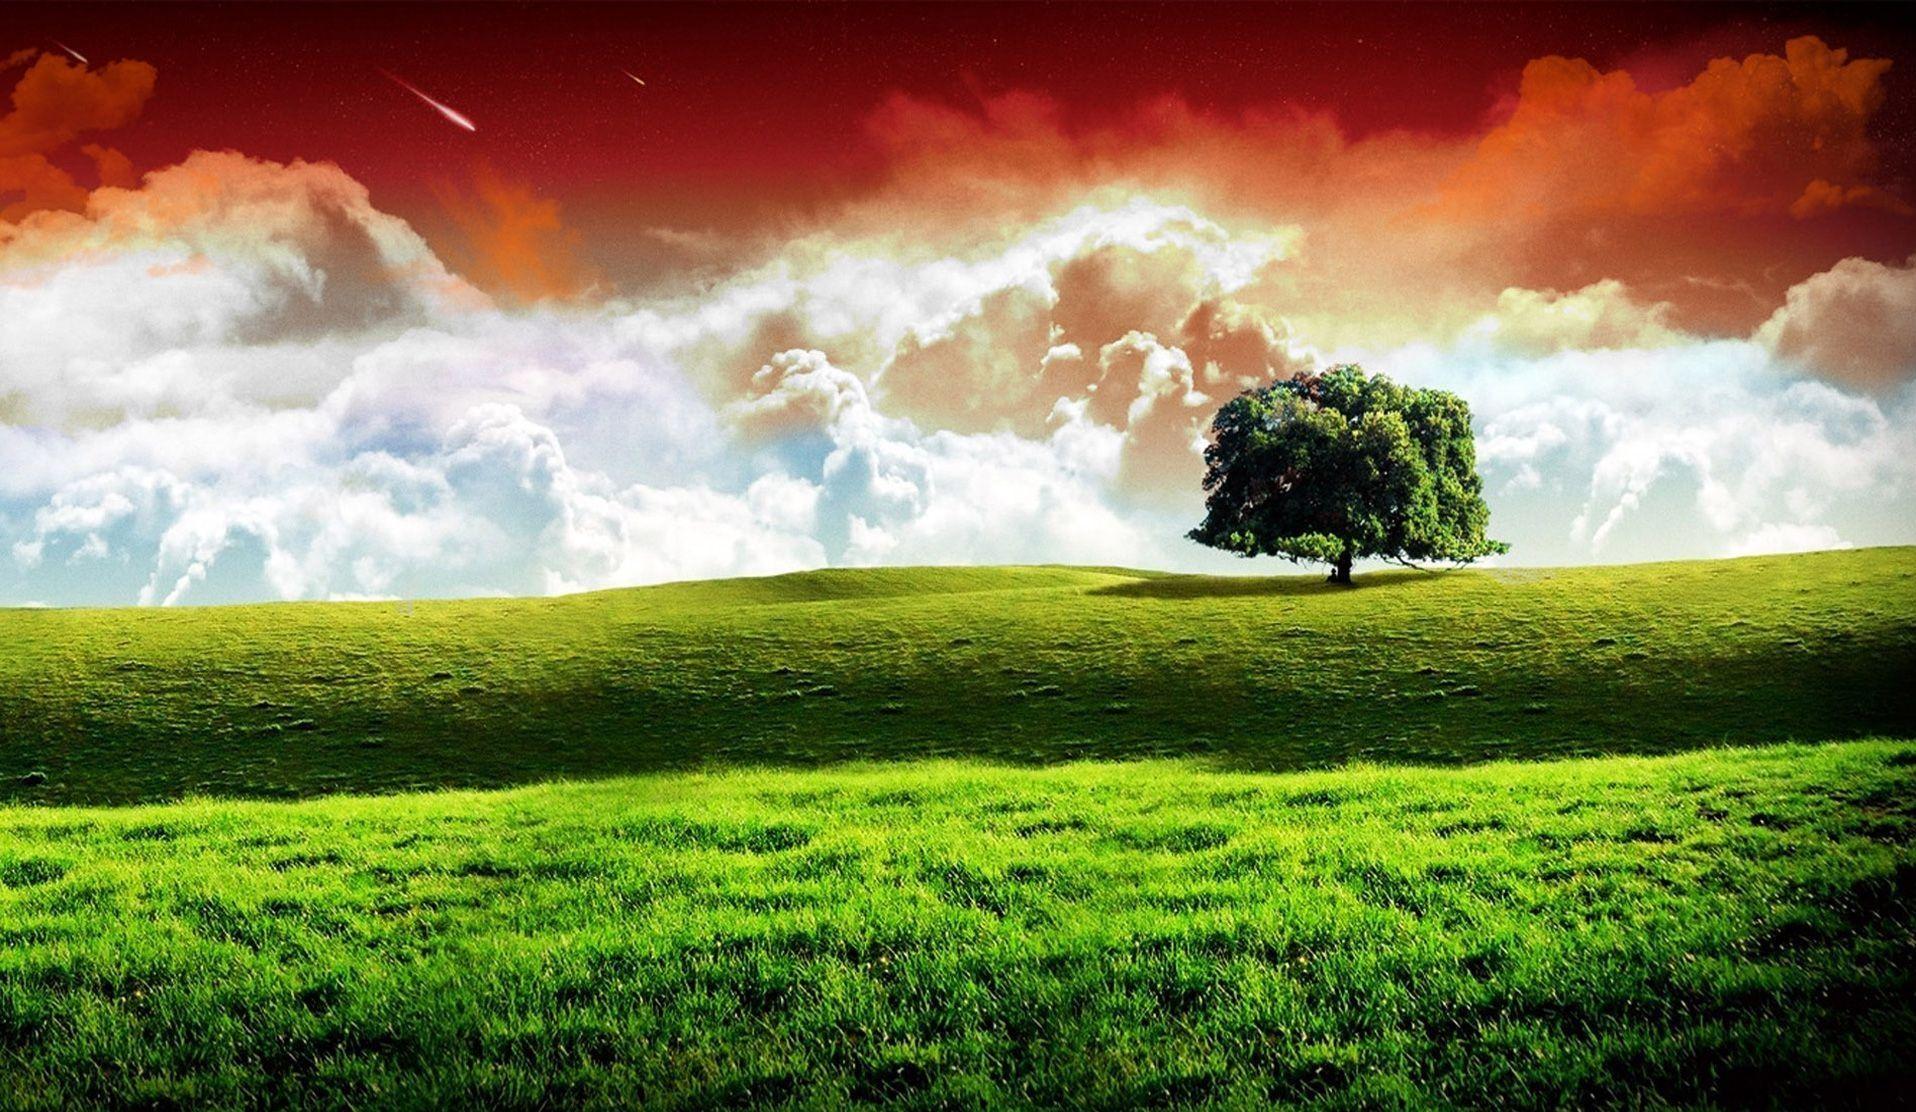 Indian Flag Image, HD Wallpaper [Free Download]